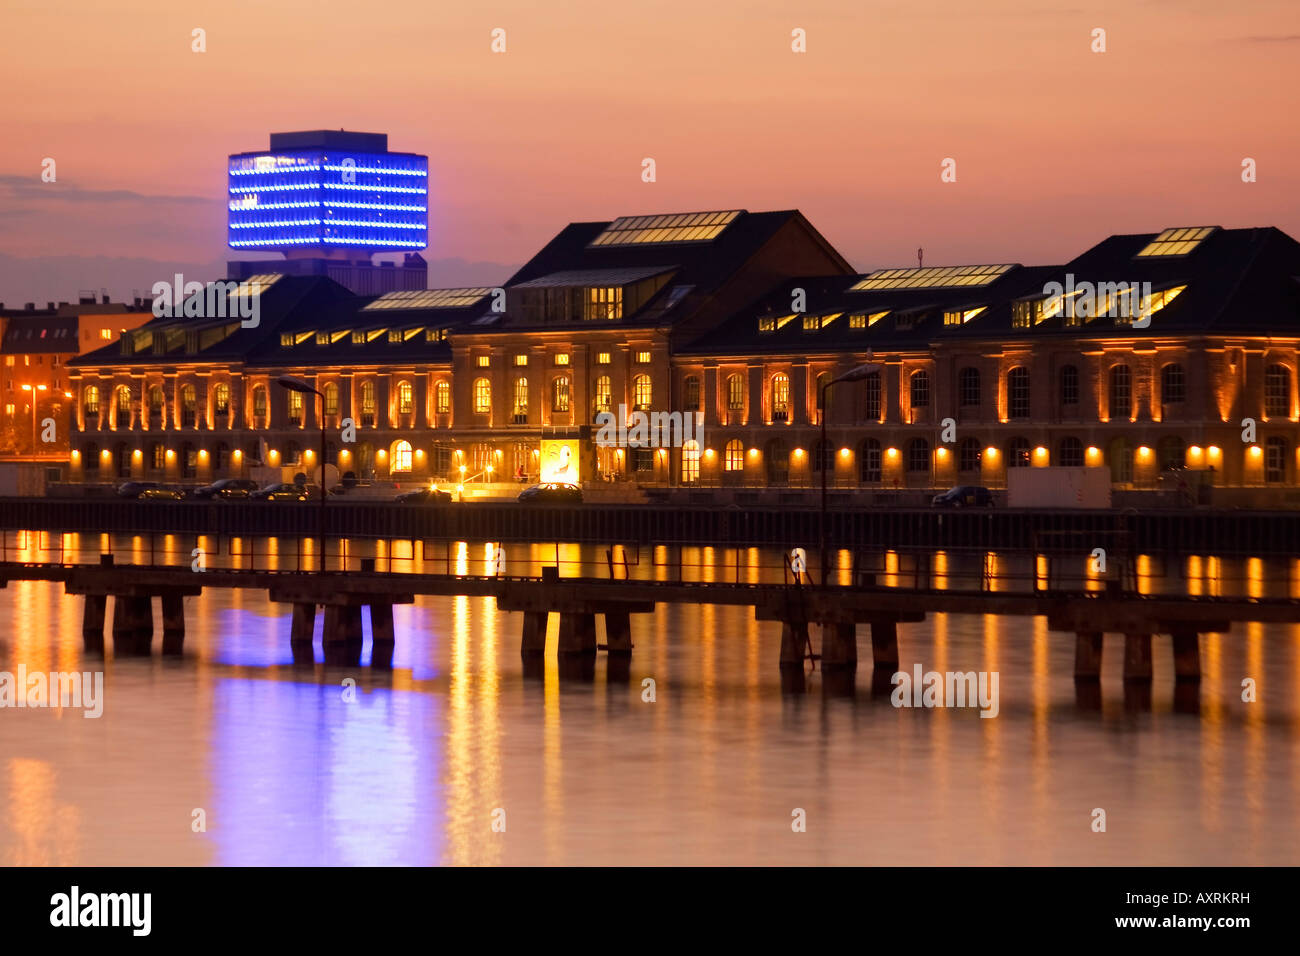 Berlin former east harbour river spree MTV studios background Oberbaum city skyscaper illuminated Stock Photo